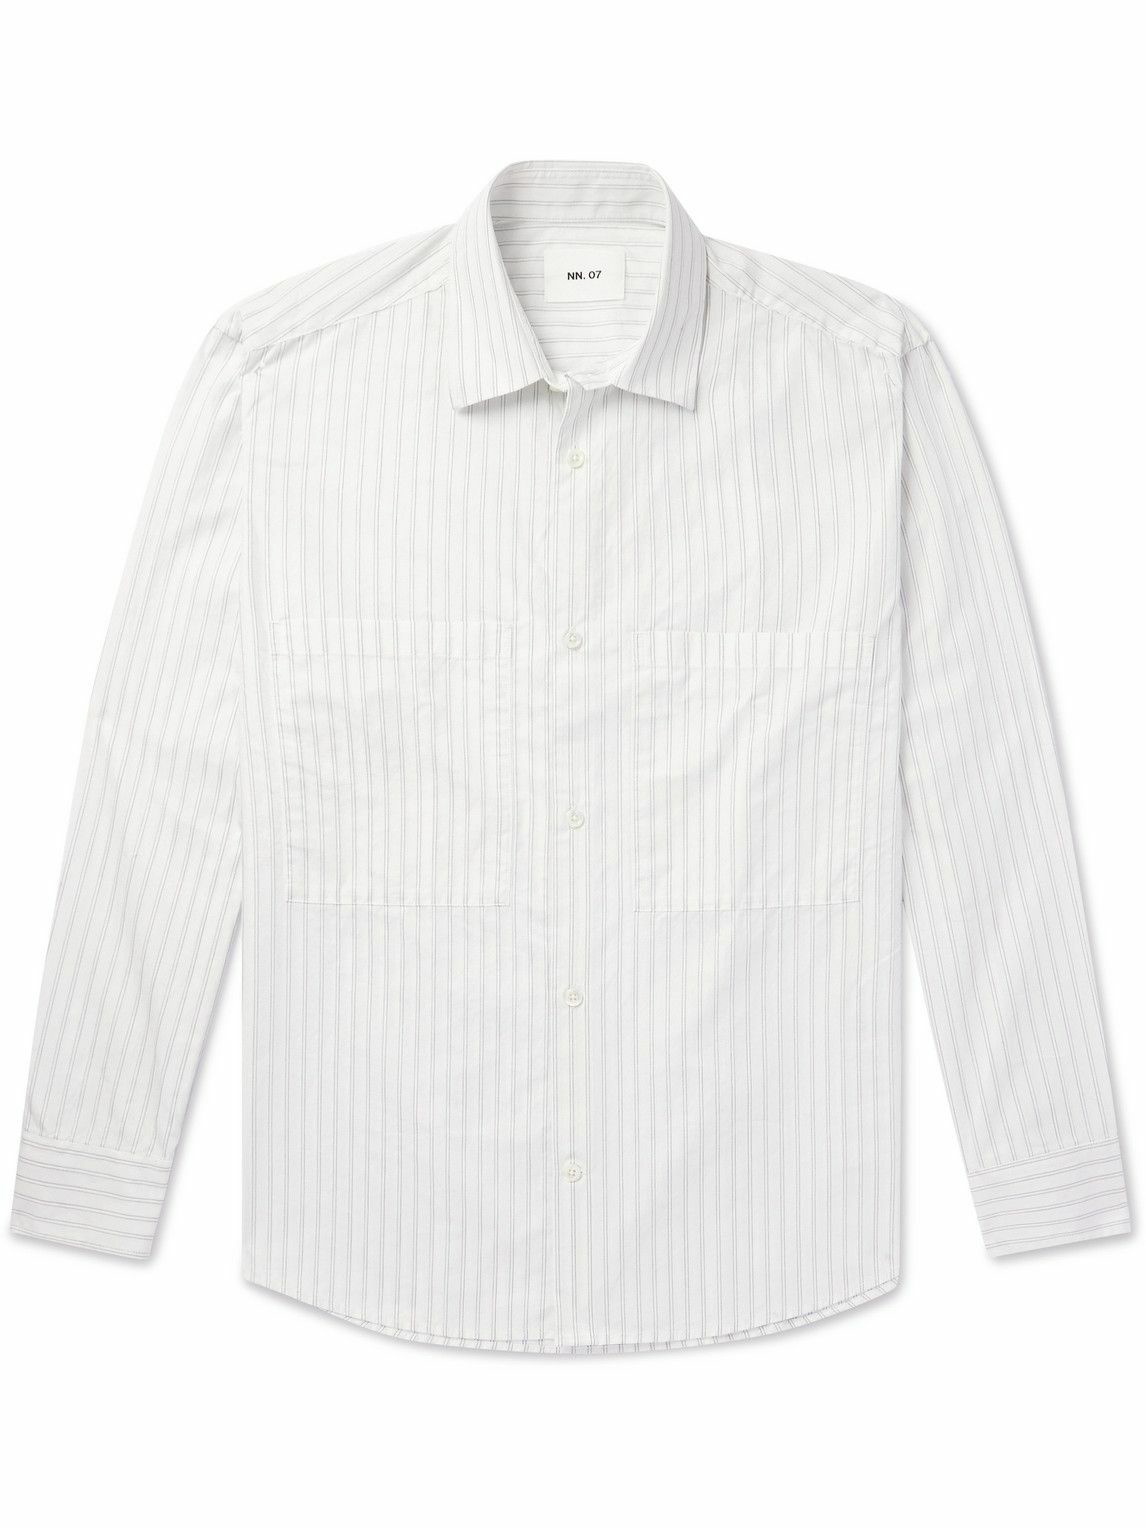 NN07 - Freddy 5973 Striped Cotton-Poplin Shirt - White NN07